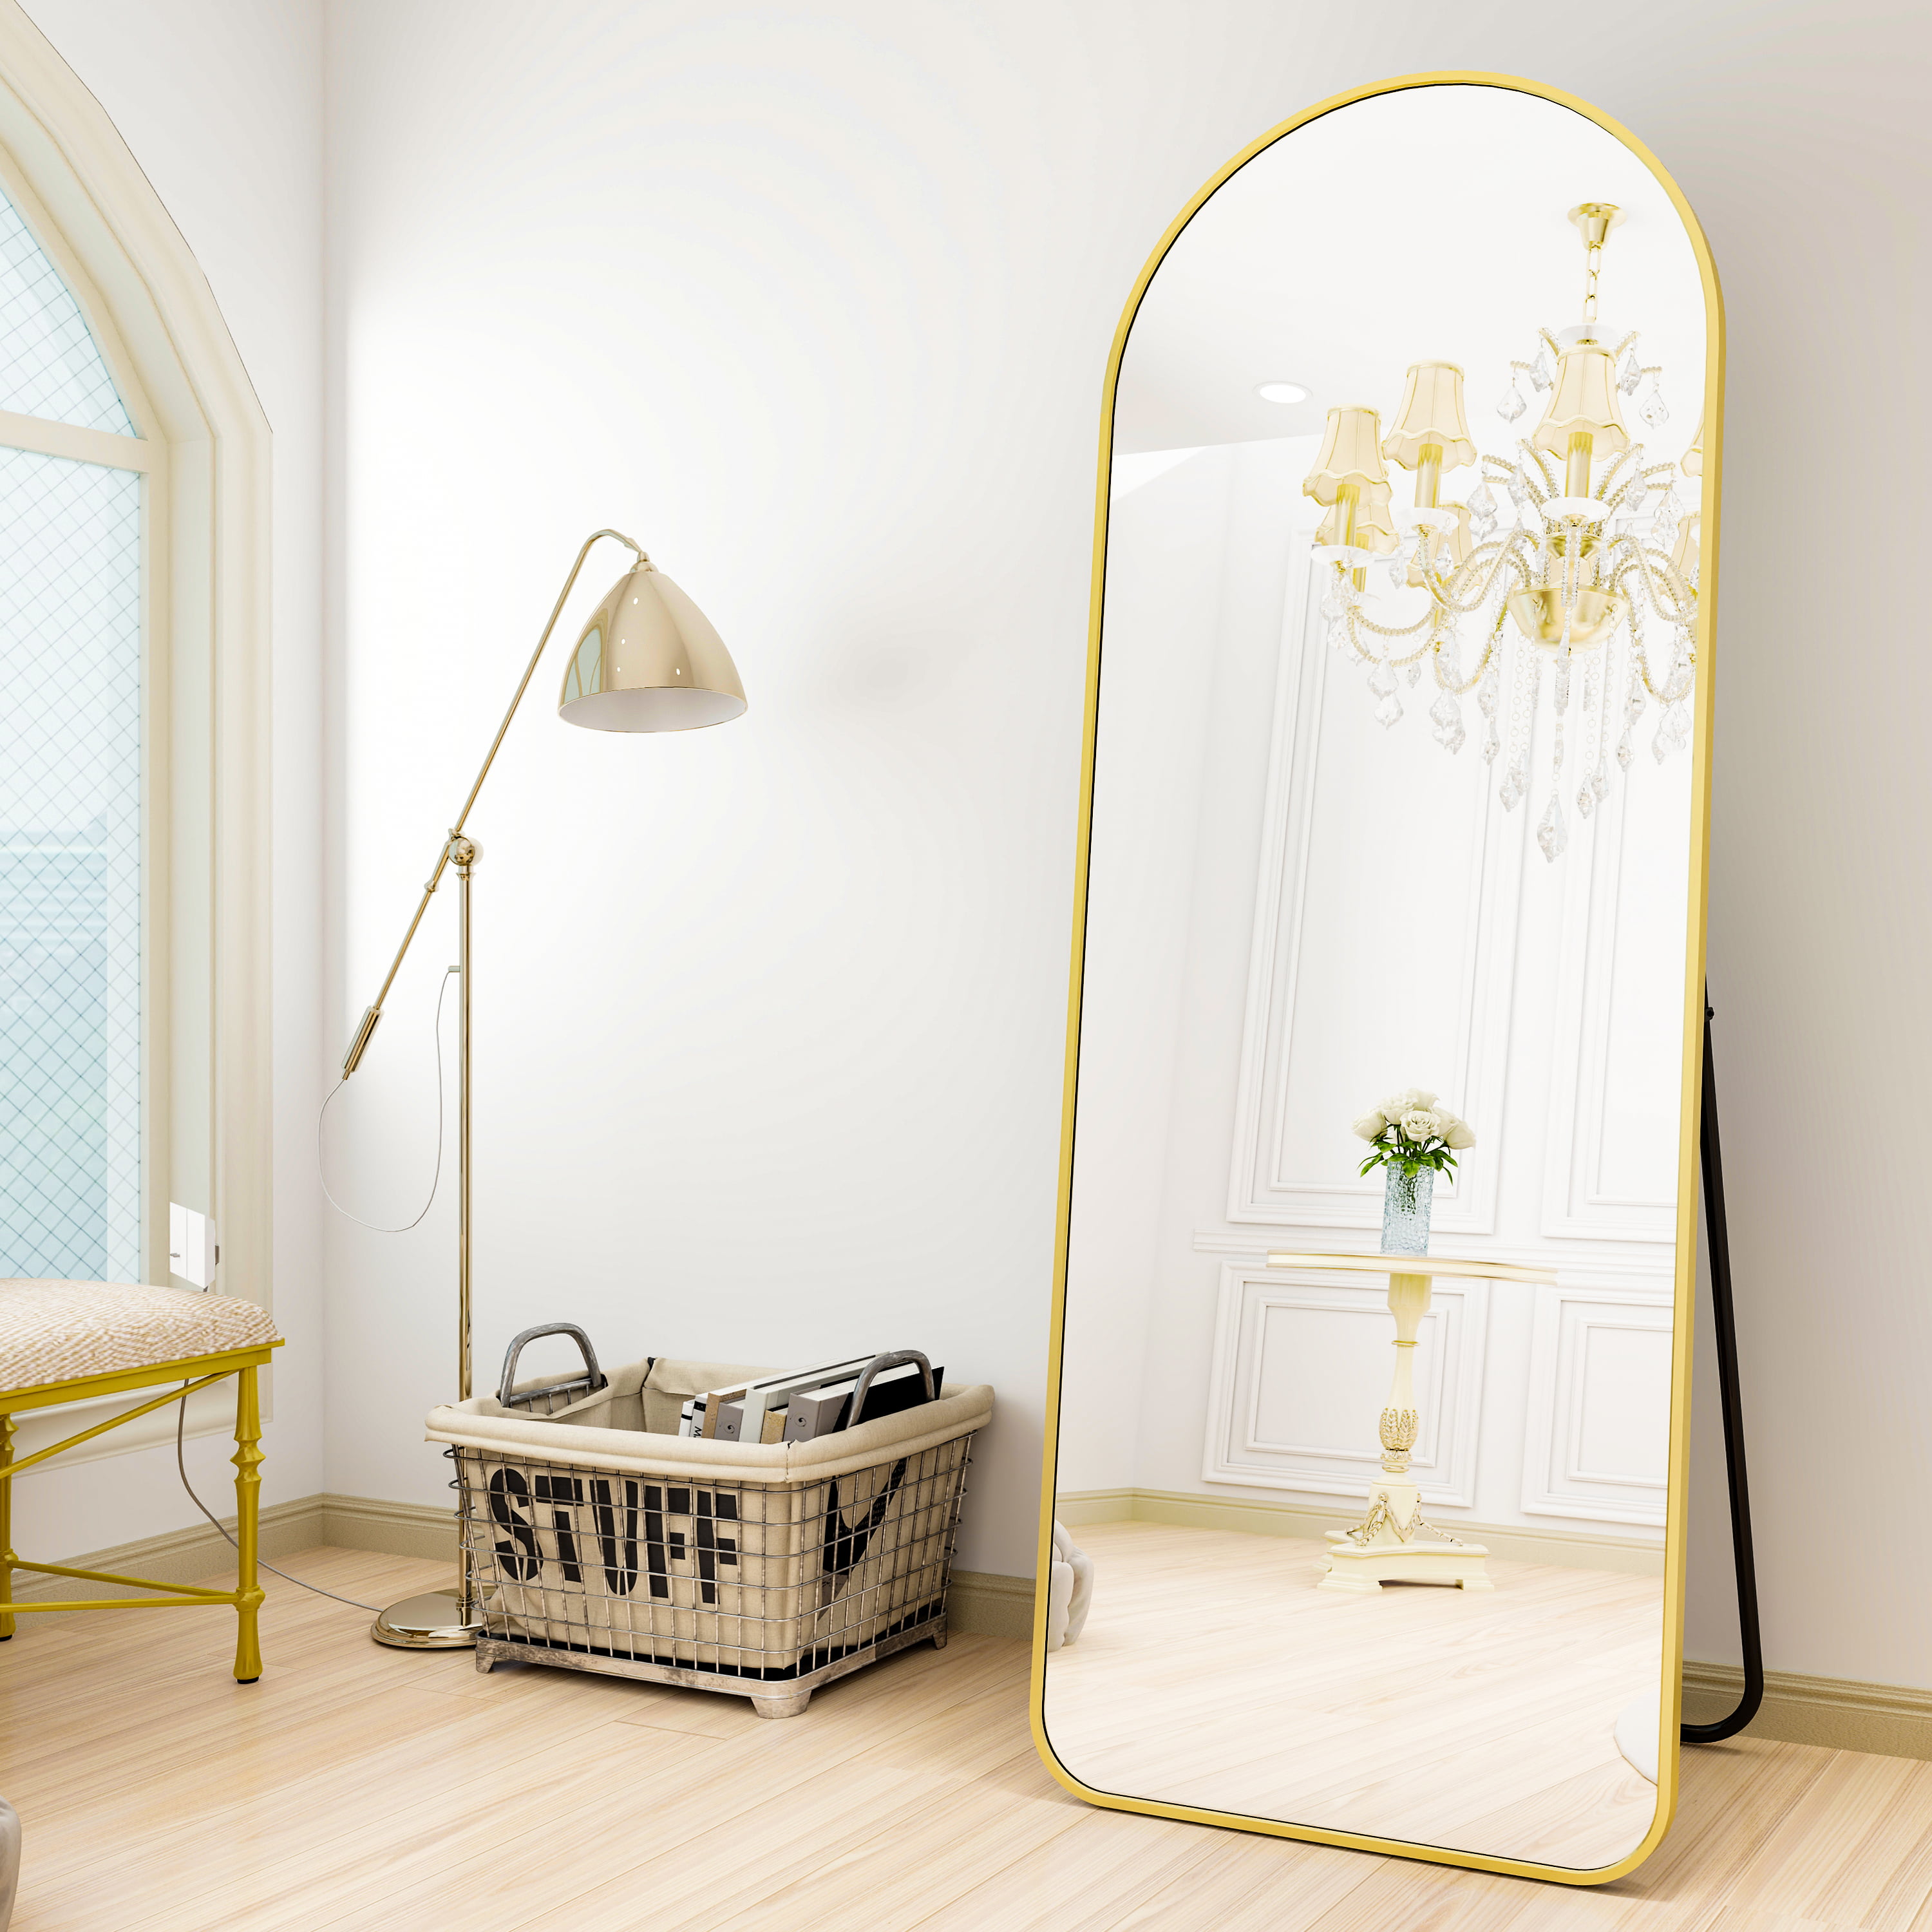 BEAUTYPEAK 64"x21" Full Length Mirror Arched Floor Mirror Full Body Mirror Standing, Gold